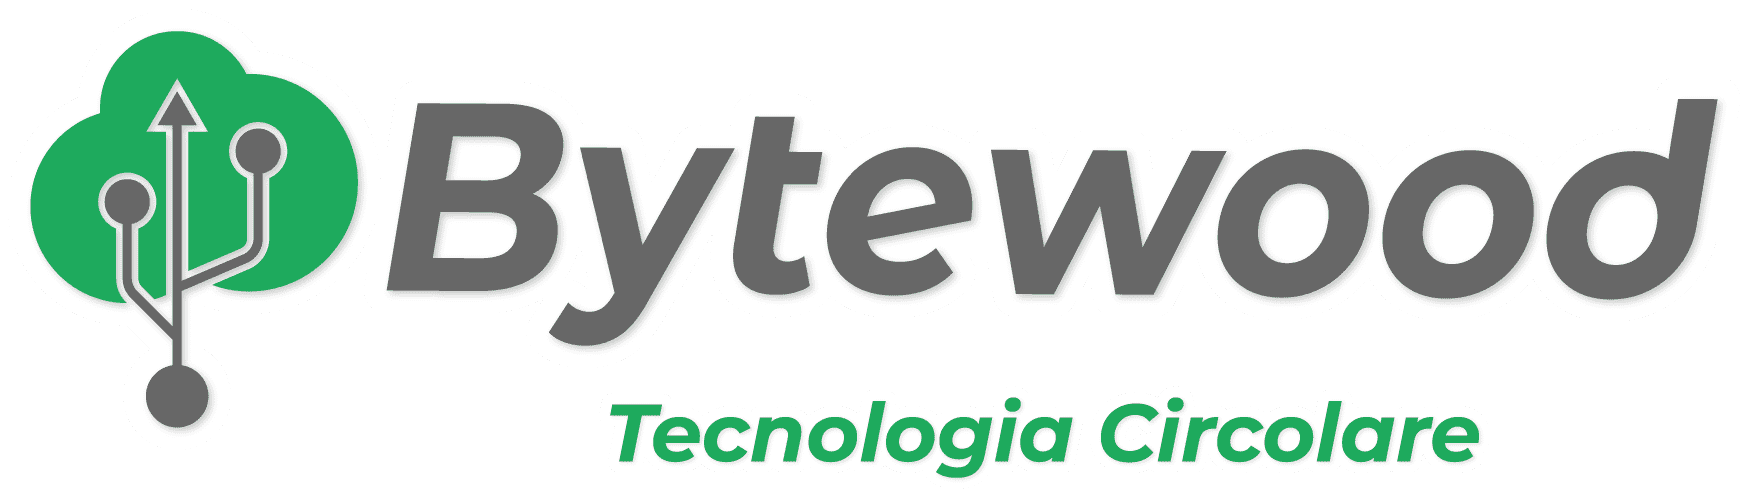 Bytewood logo